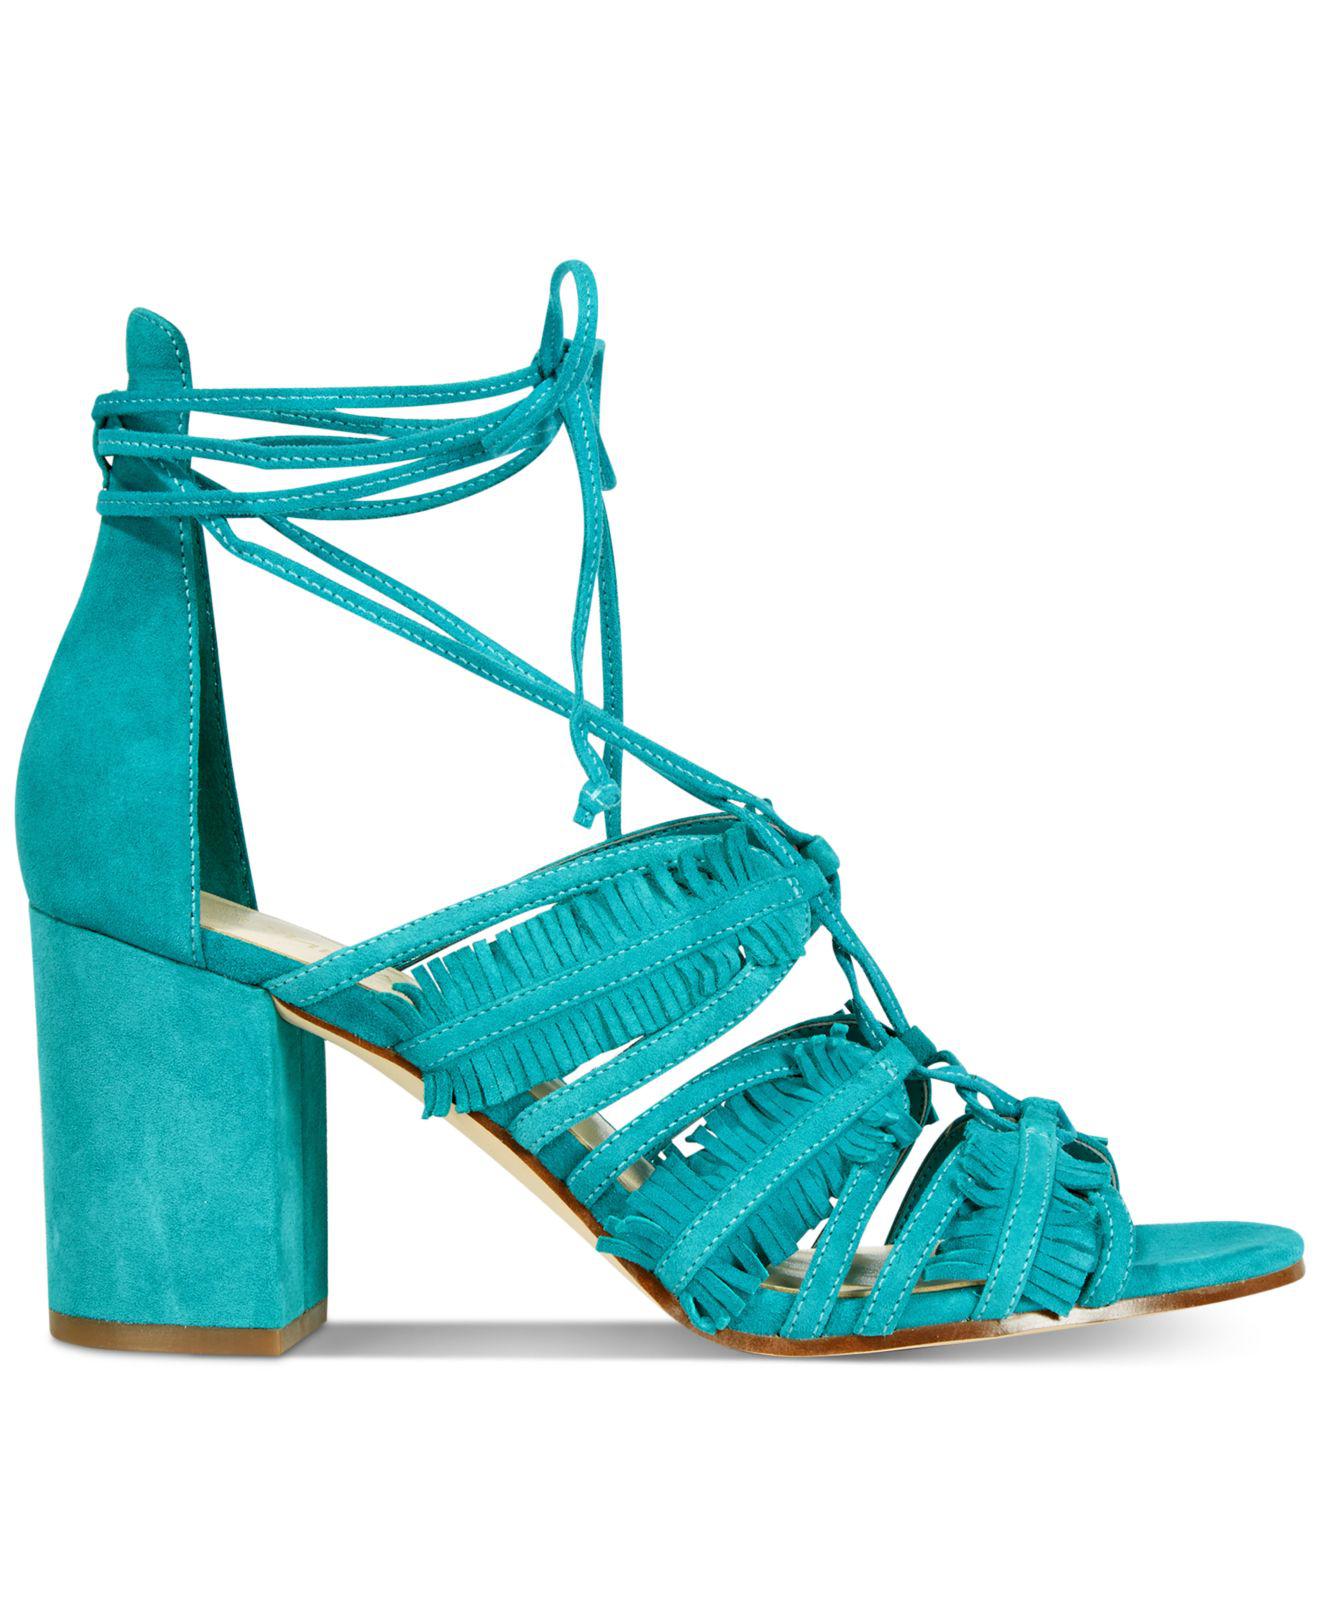 Nine West Suede Genie Lace-up Block-heel Sandals in Dark Turquoise Suede  (Blue) - Lyst